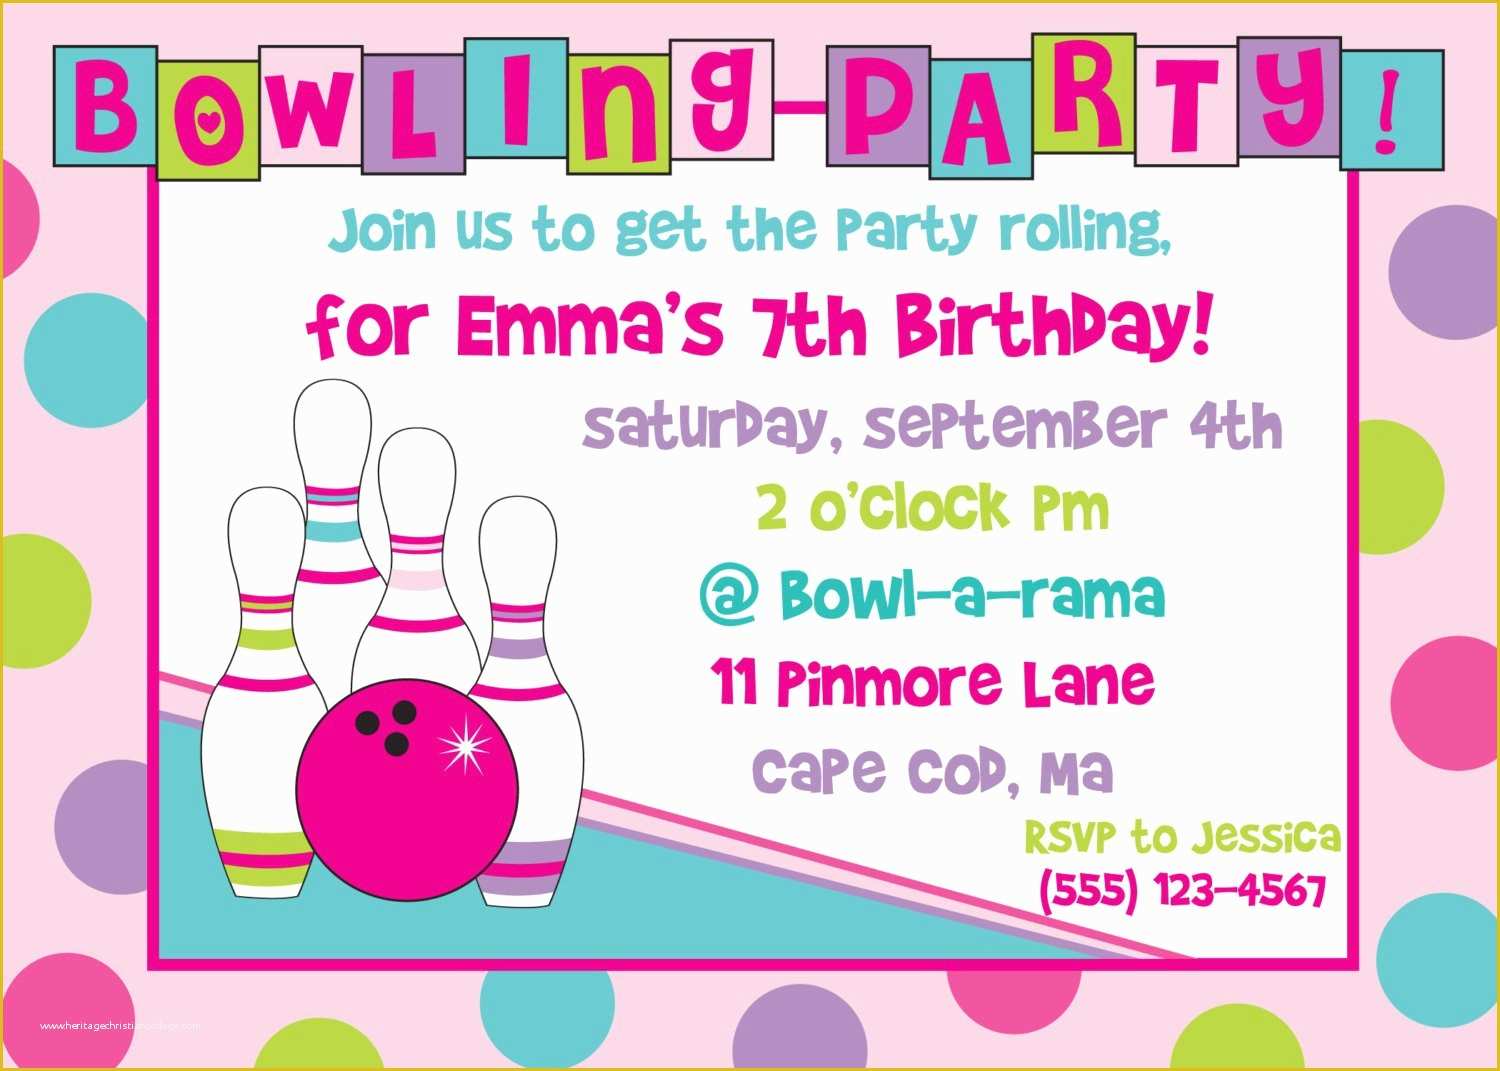 Free Birthday Party Invitation Templates Of Bowling Birthday Party Invitations Free Templates